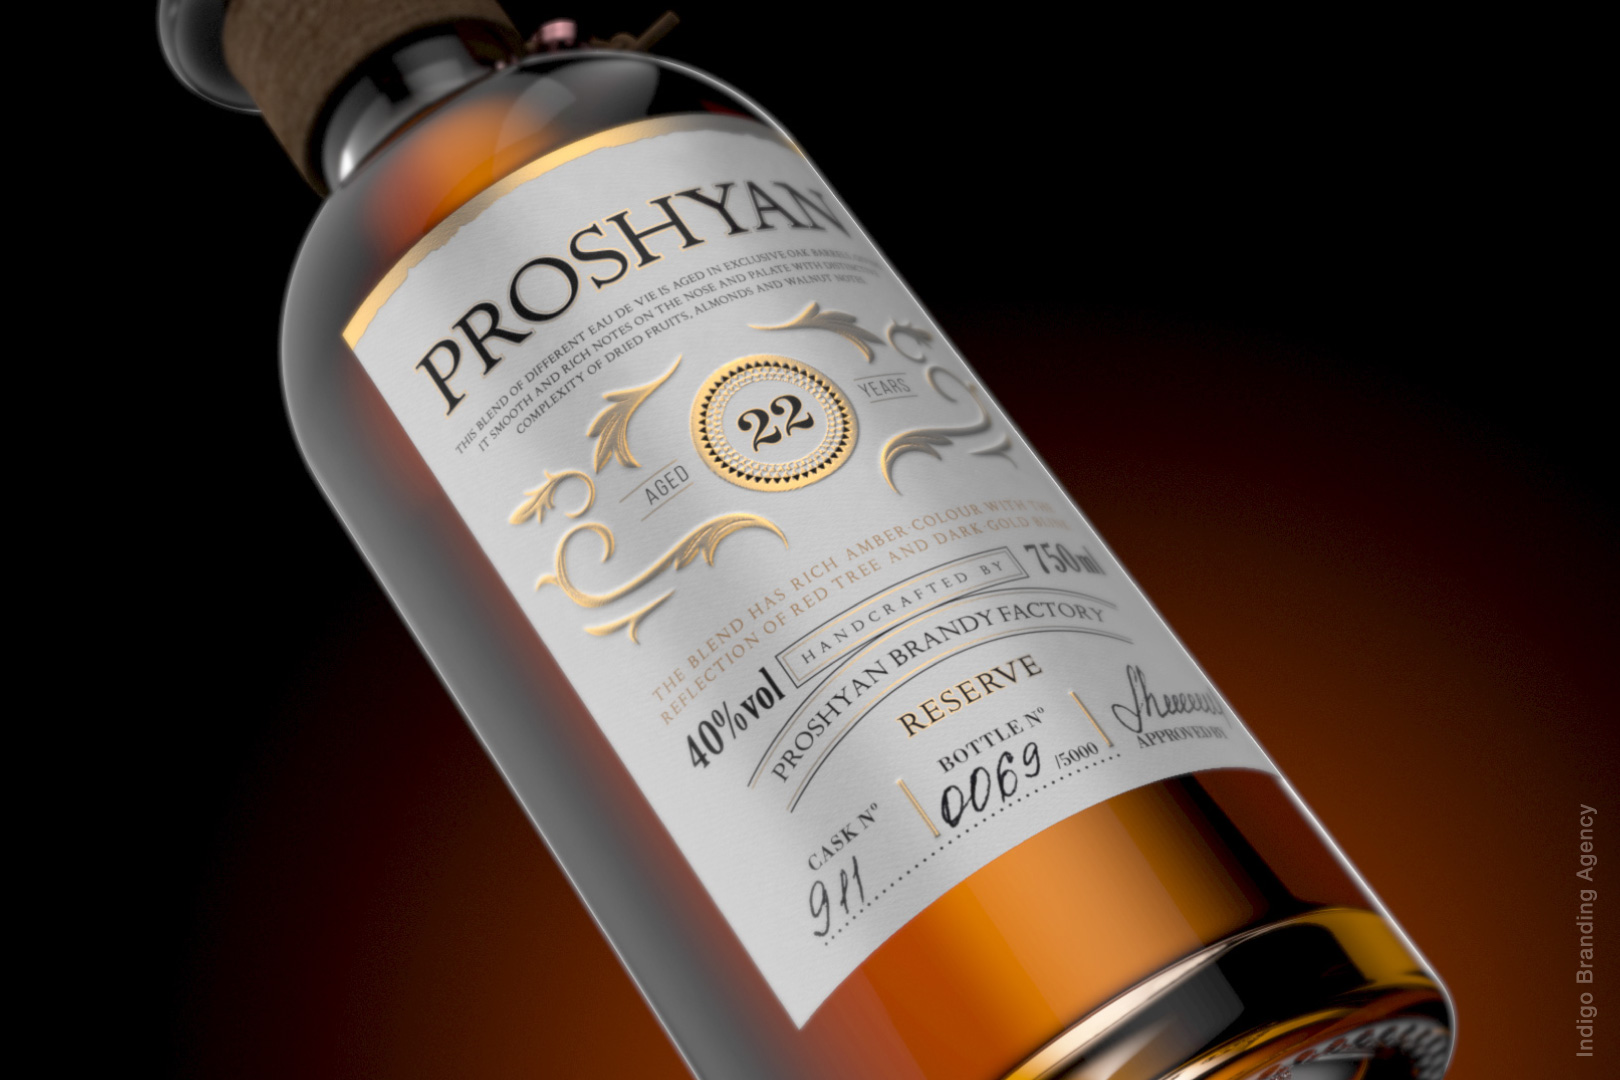 Proshyan 22 labeling and packaging design by Indigo branding